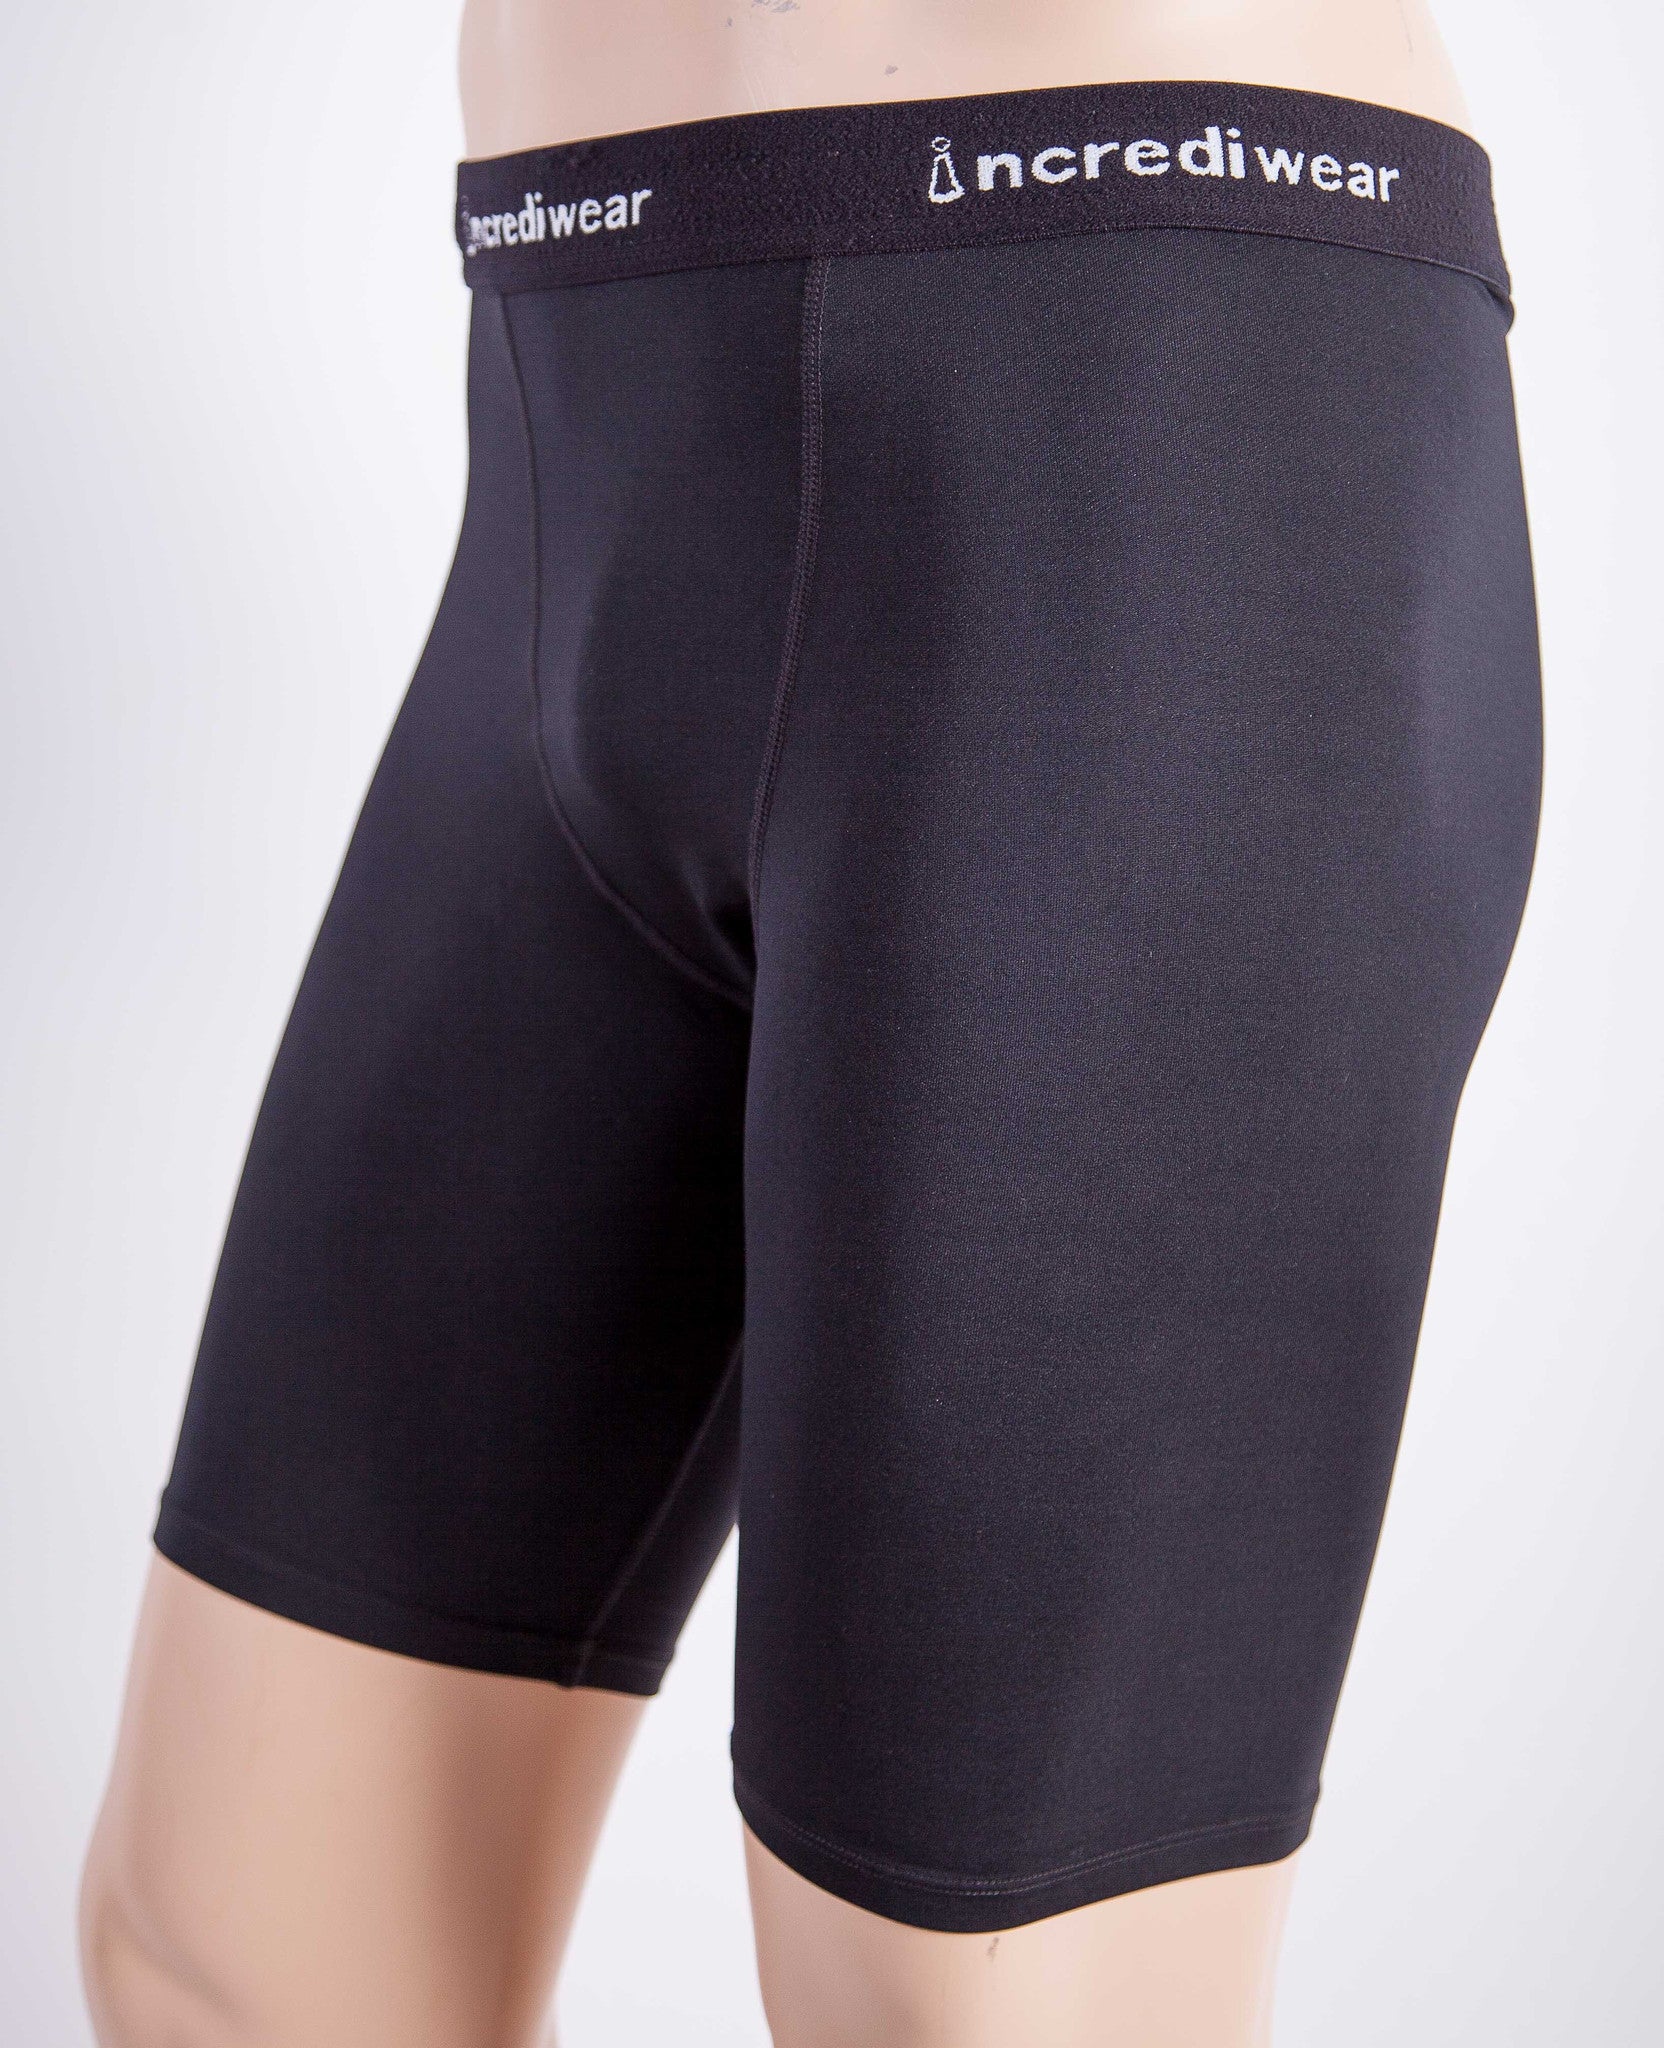 Incrediwear Sport Recovery Pants by Incrediwear - Ebambu.ca natural health product store - free shipping <59$ 